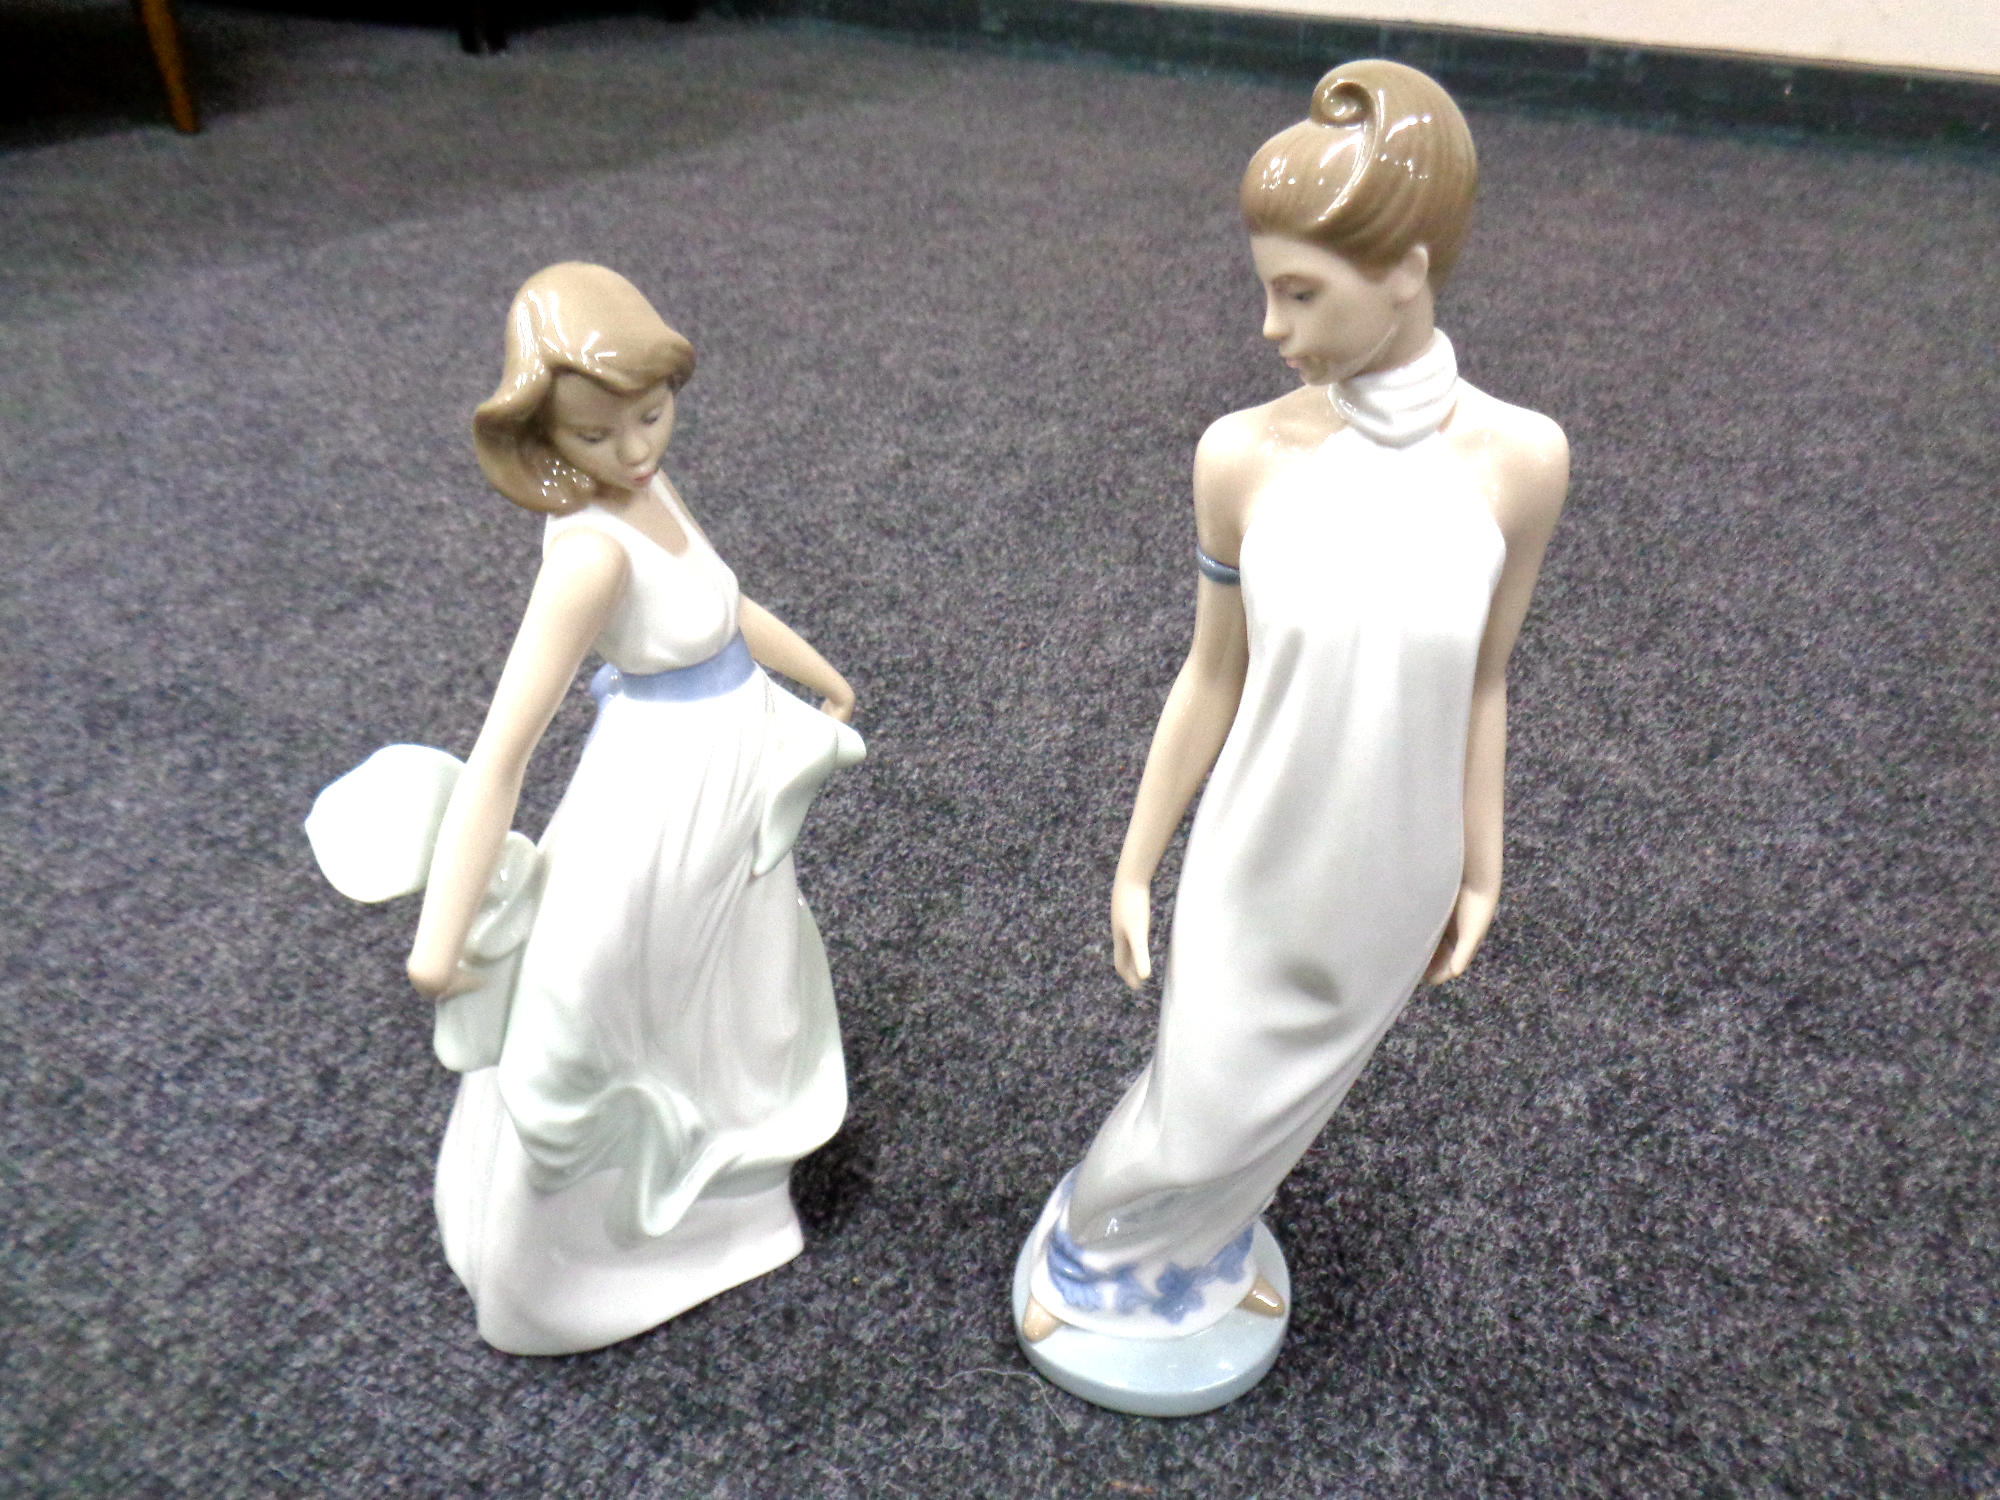 Two Nao figures of ladies.